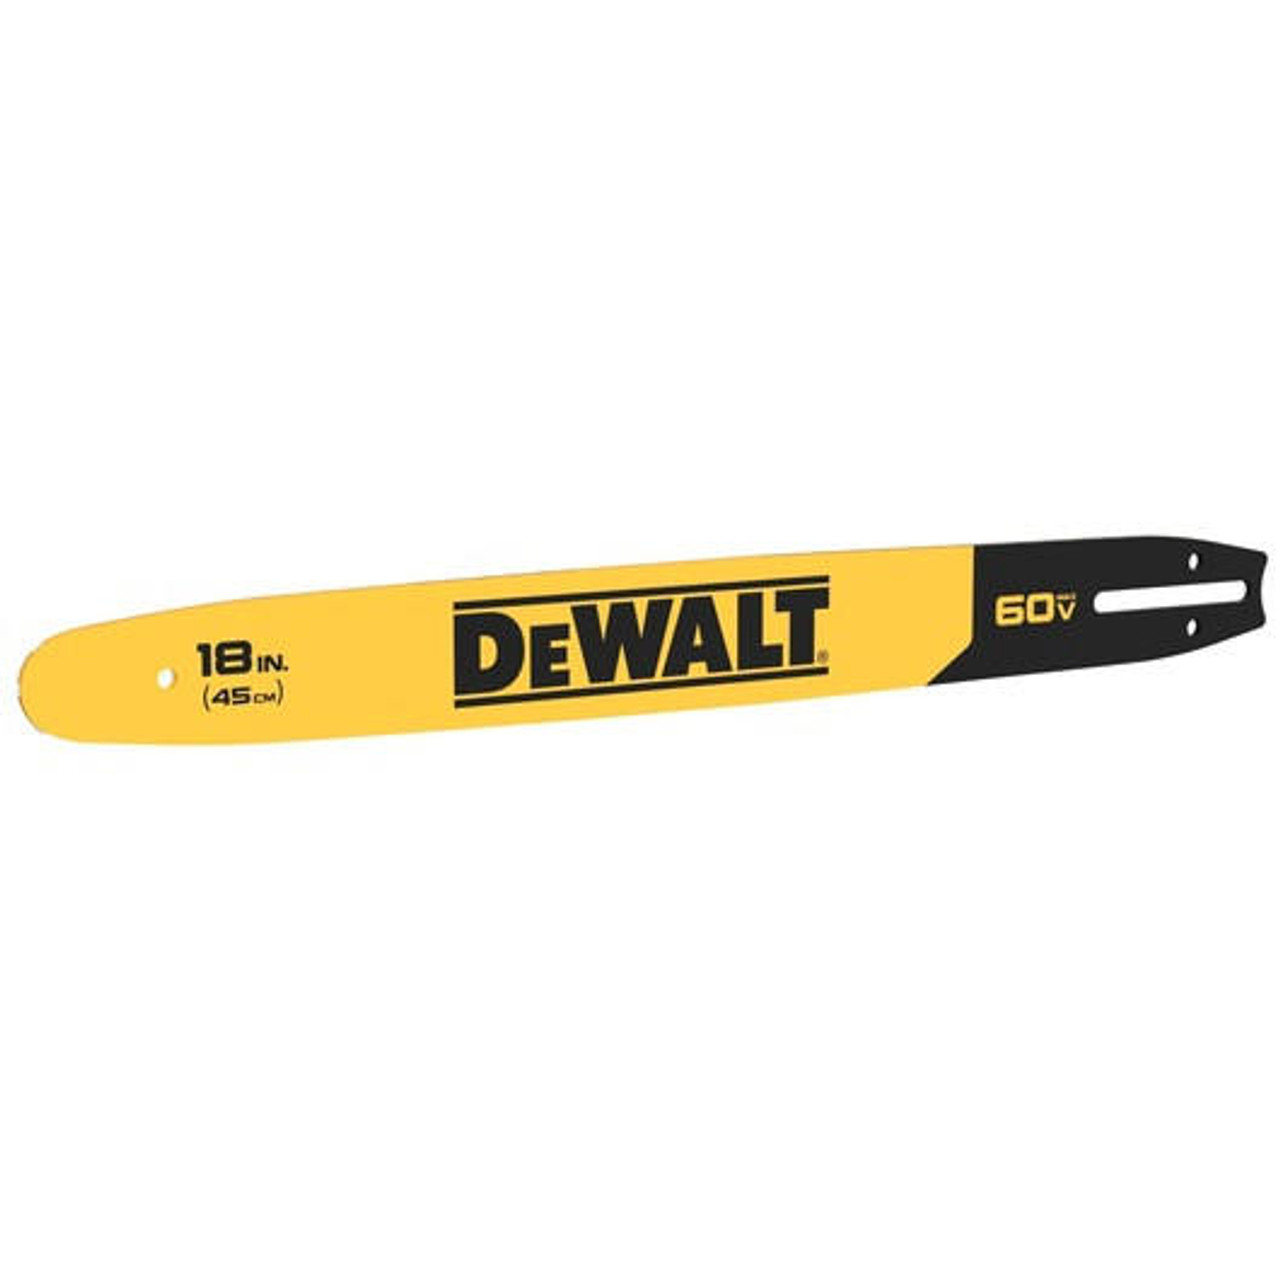 Dewalt DEWALT 18 in. Replacement Chainsaw Bar DWZCSB18 